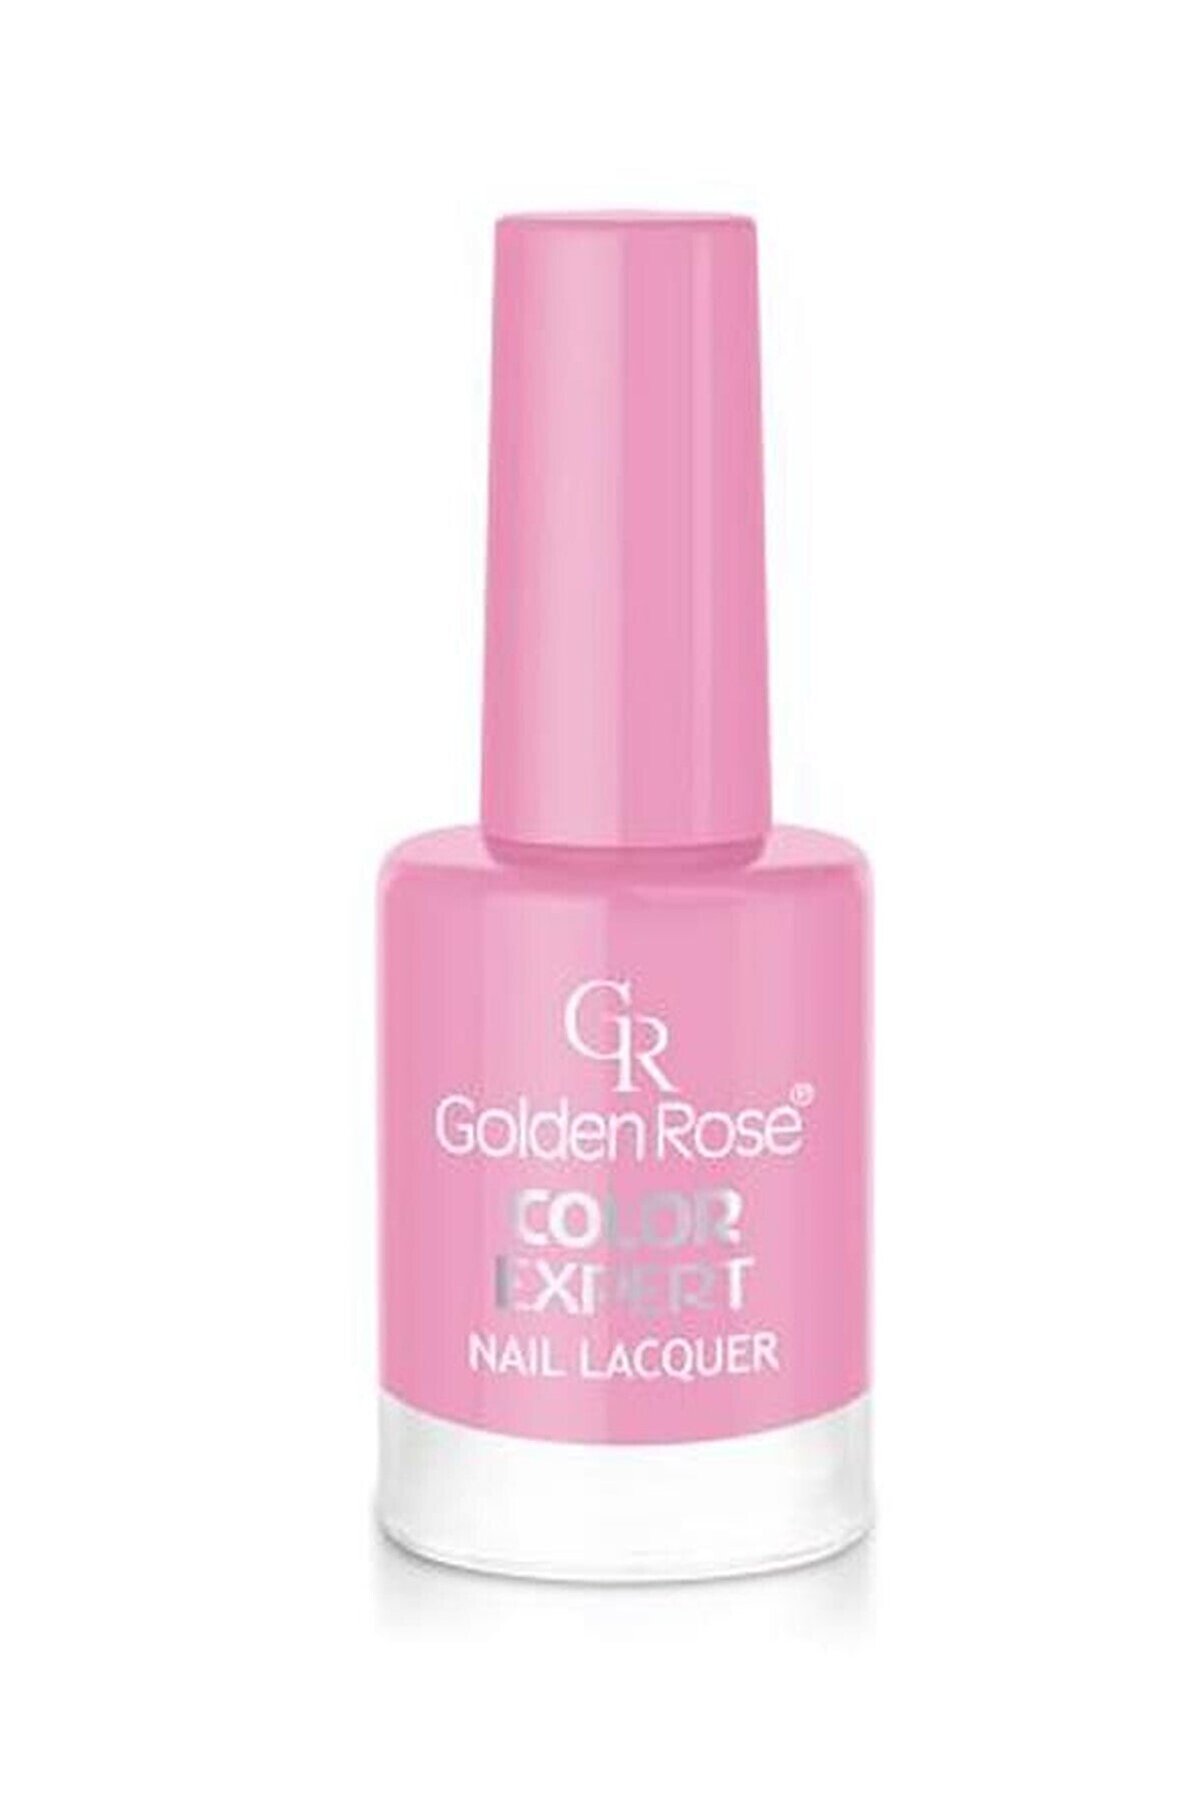 Golden Rose Oje - Color Expert Nail Lacquer No: 53 8691190703530